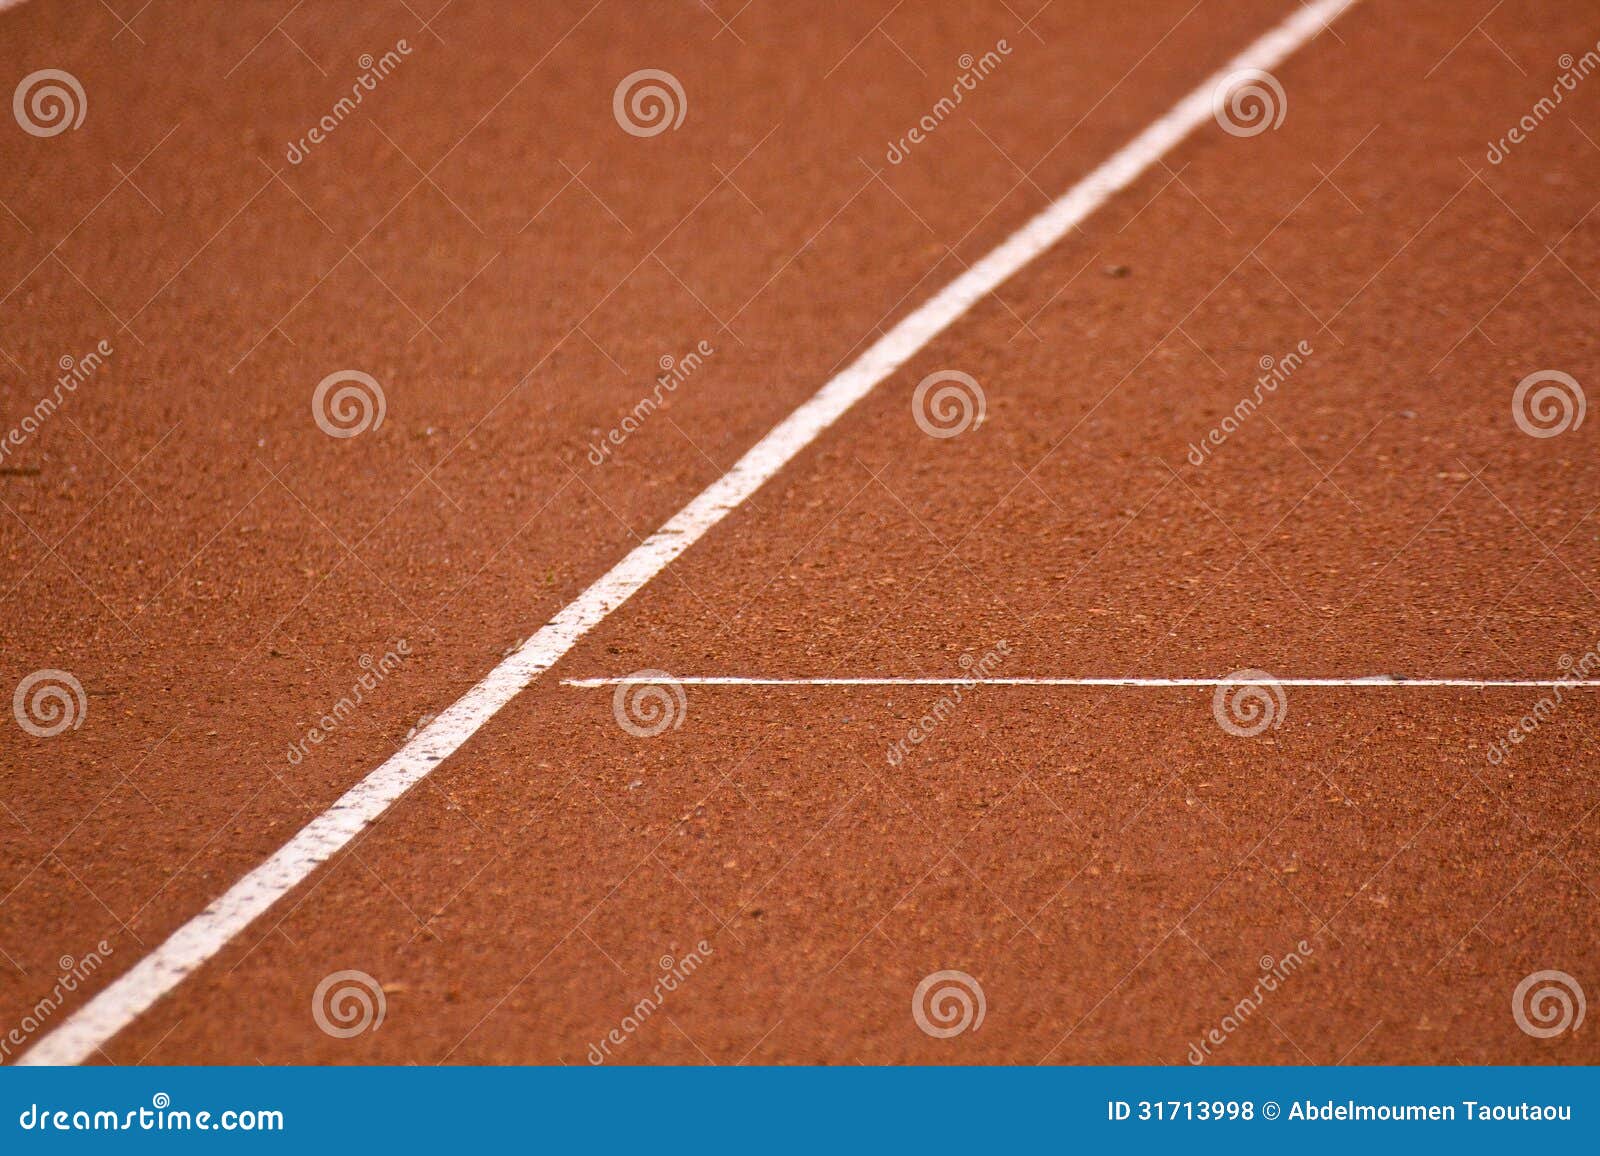 tenis line